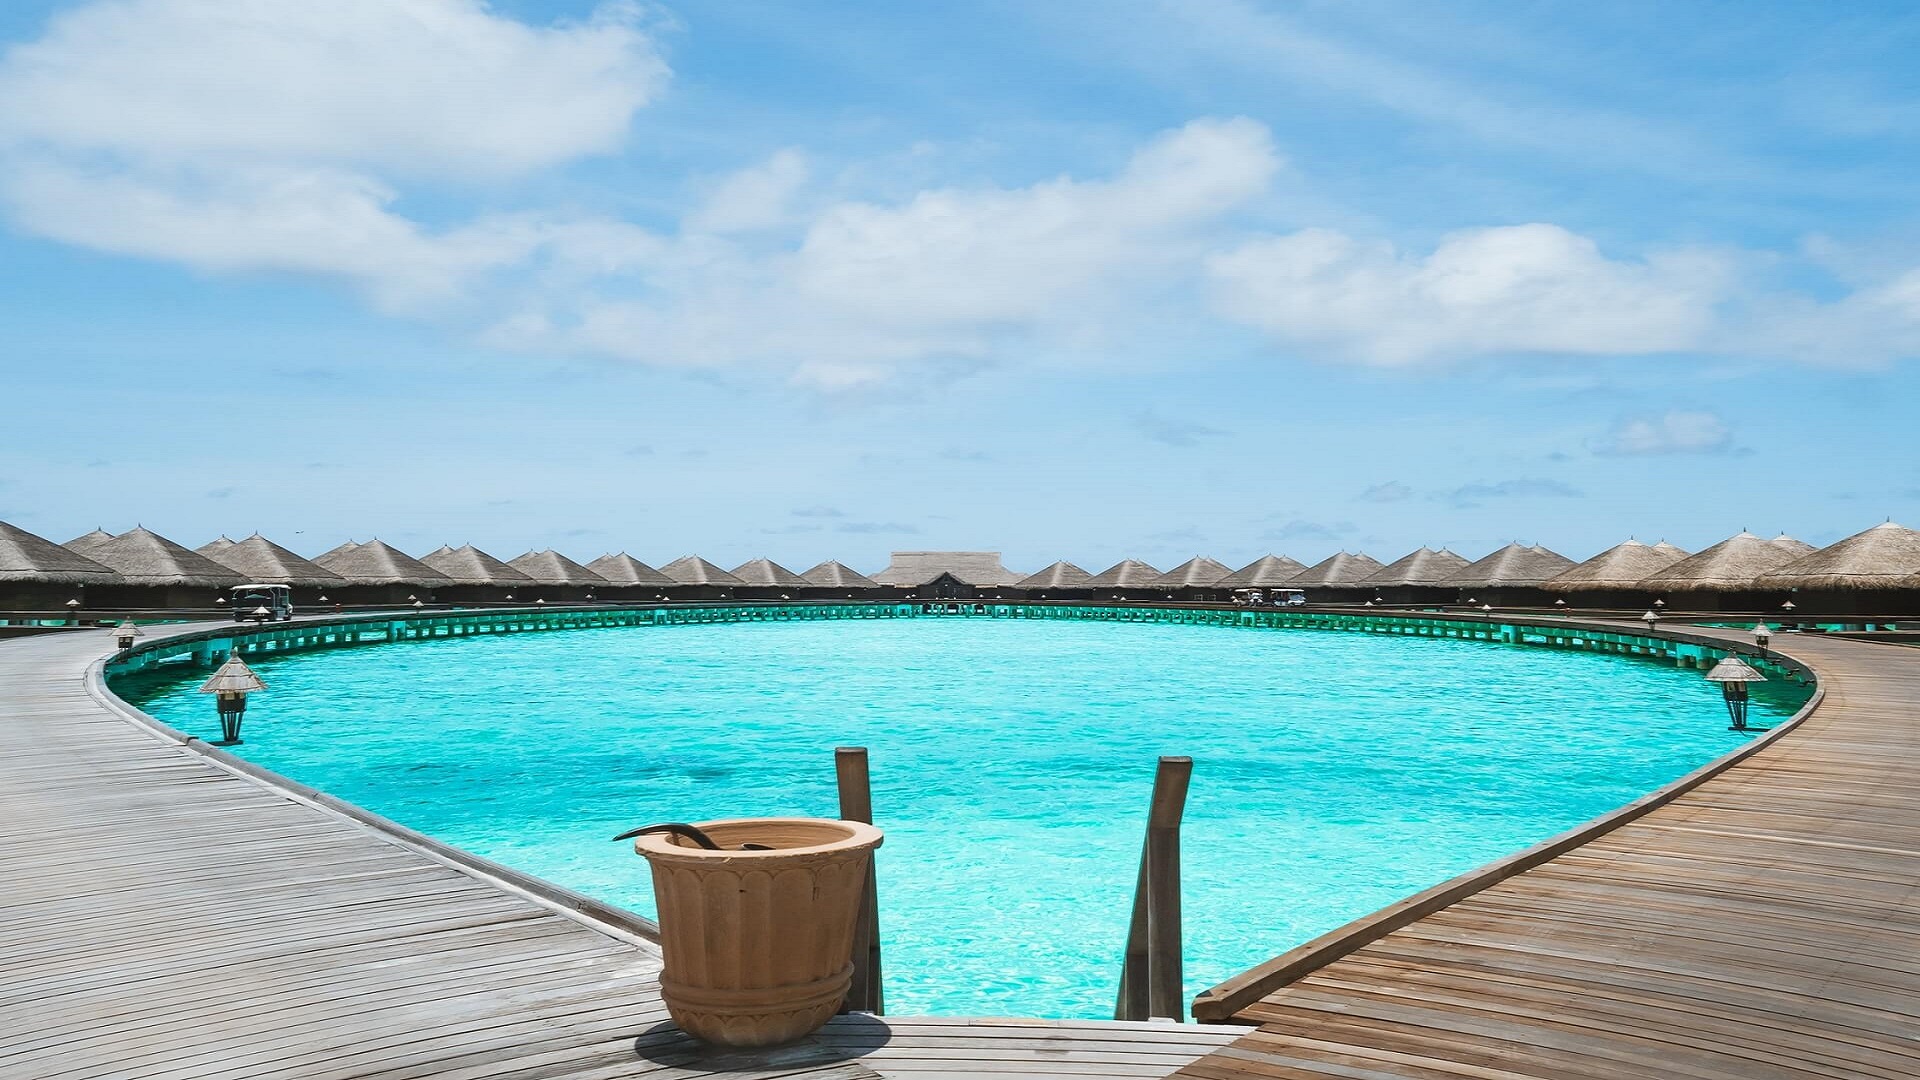 10 Best Island in Maldives for Honeymoon